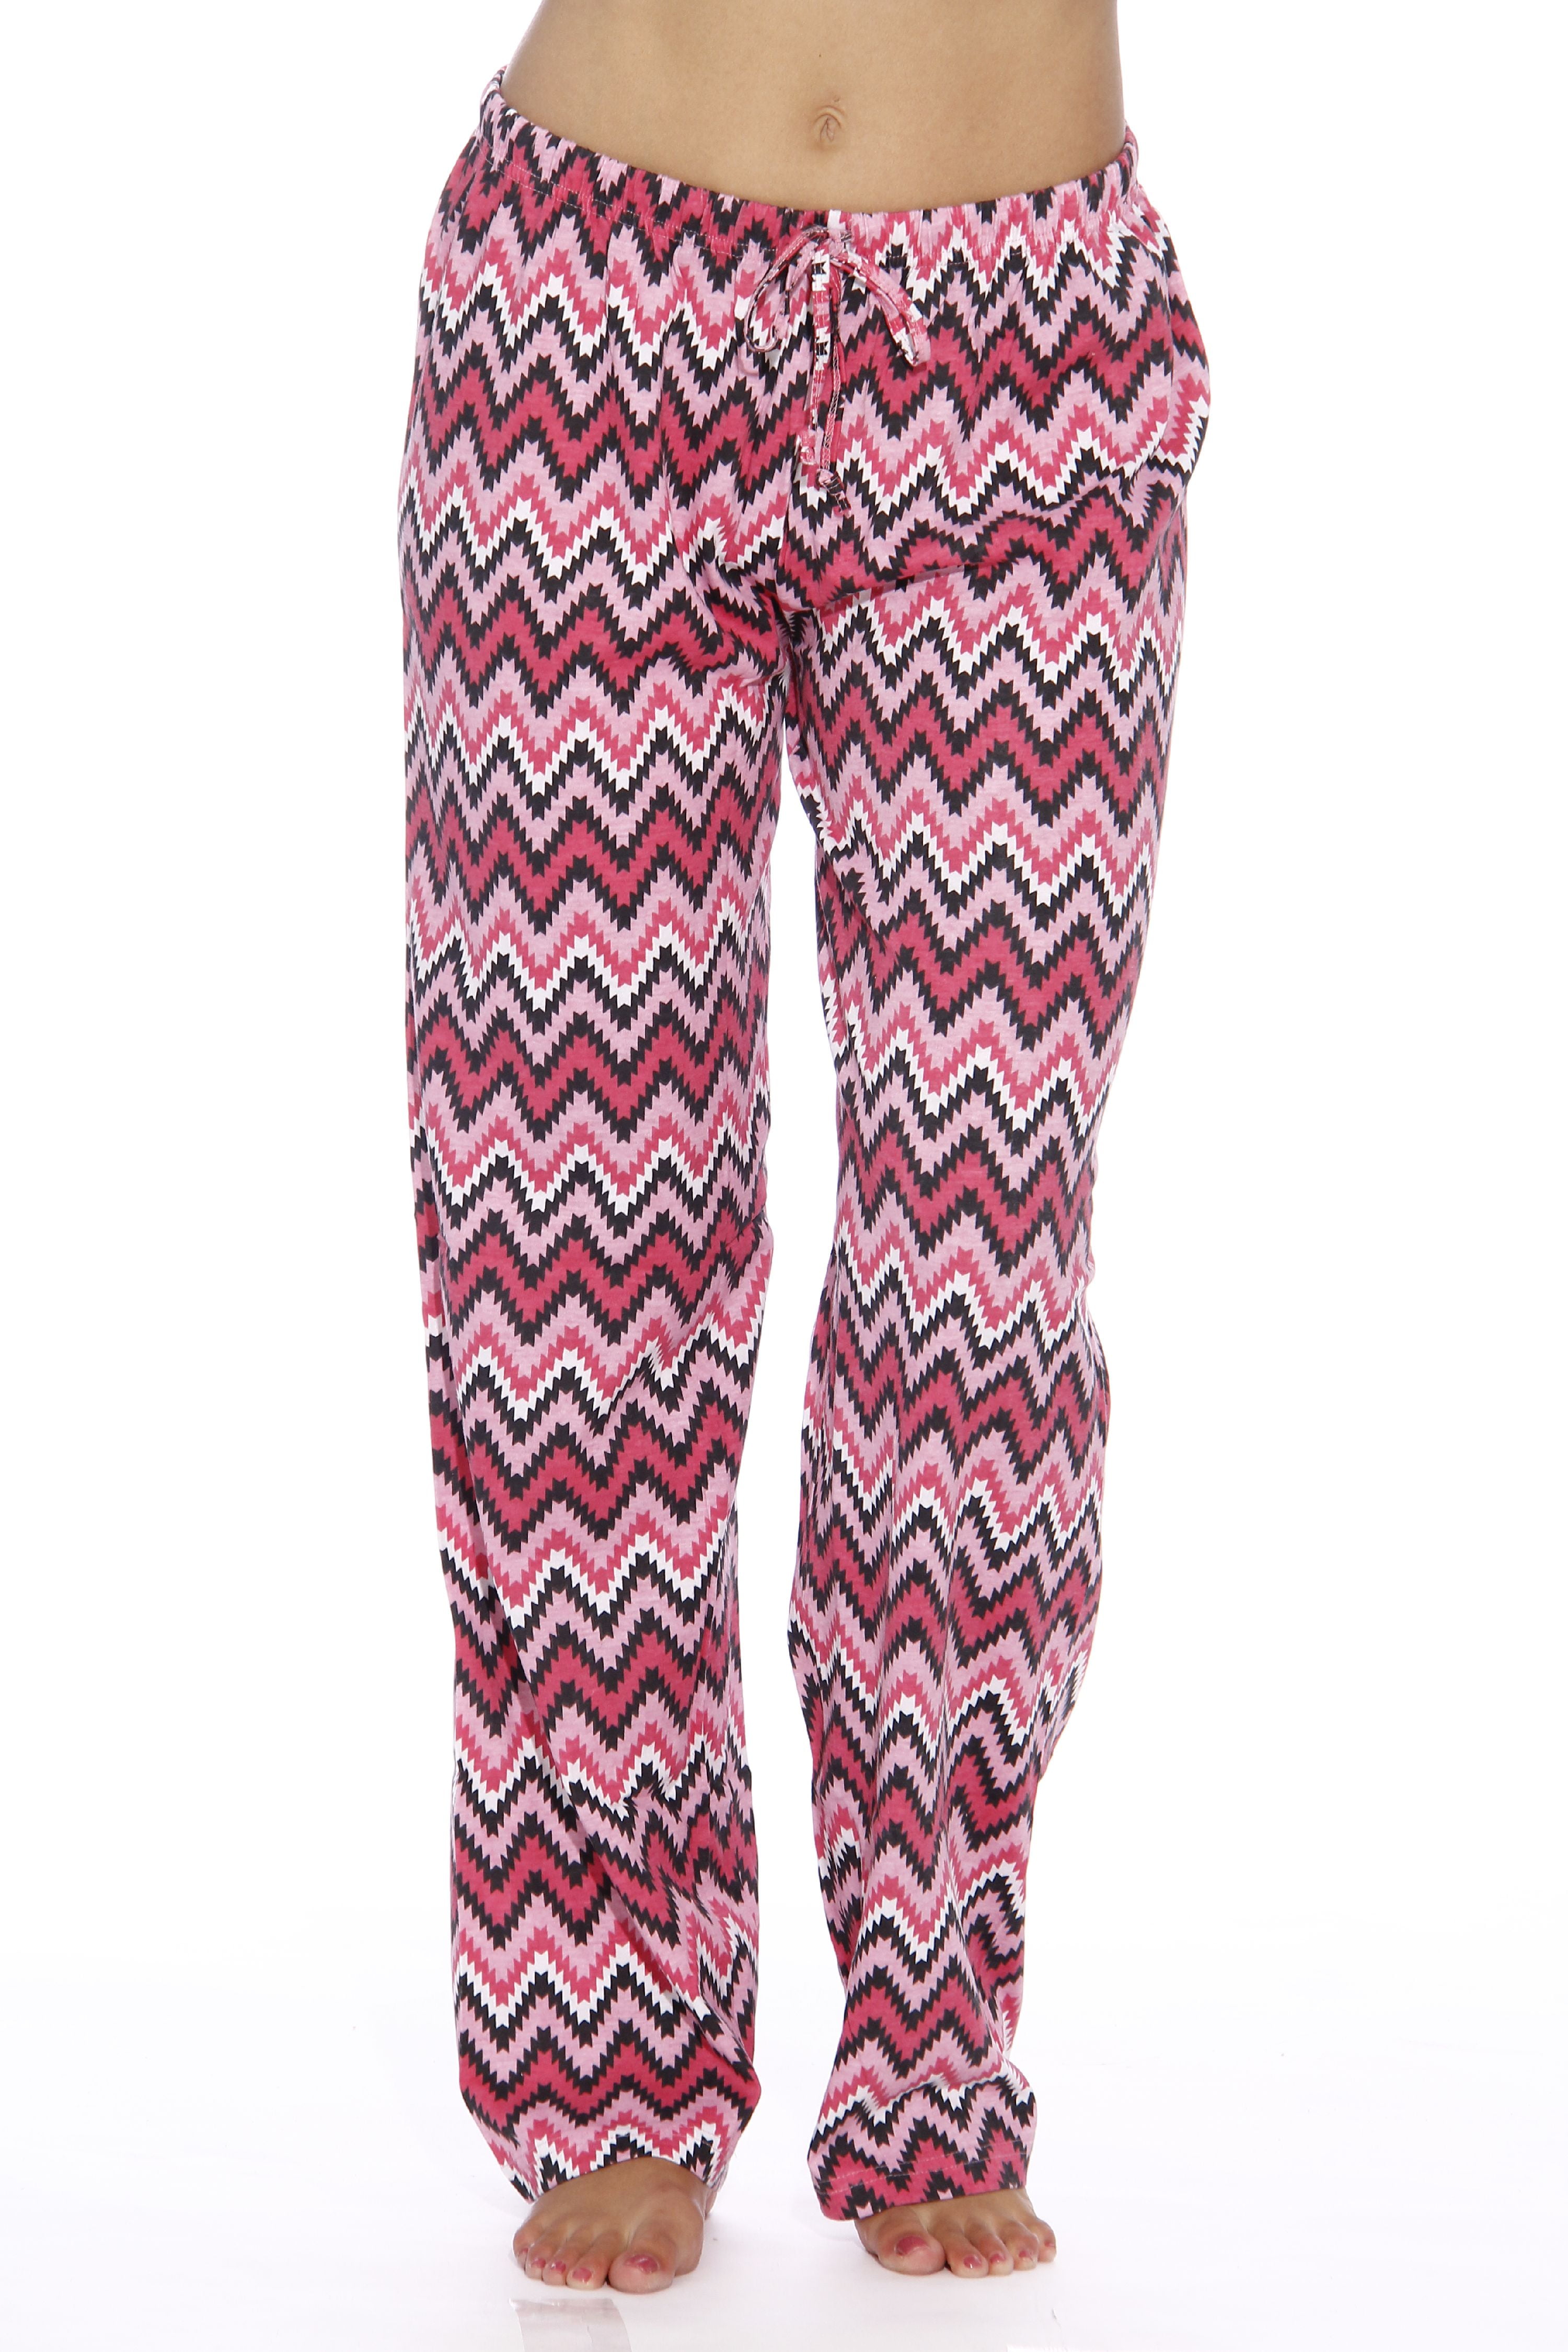 Just Love - Just Love Womens Comfy Cotton Pajama Pants (Chevron Pink ...